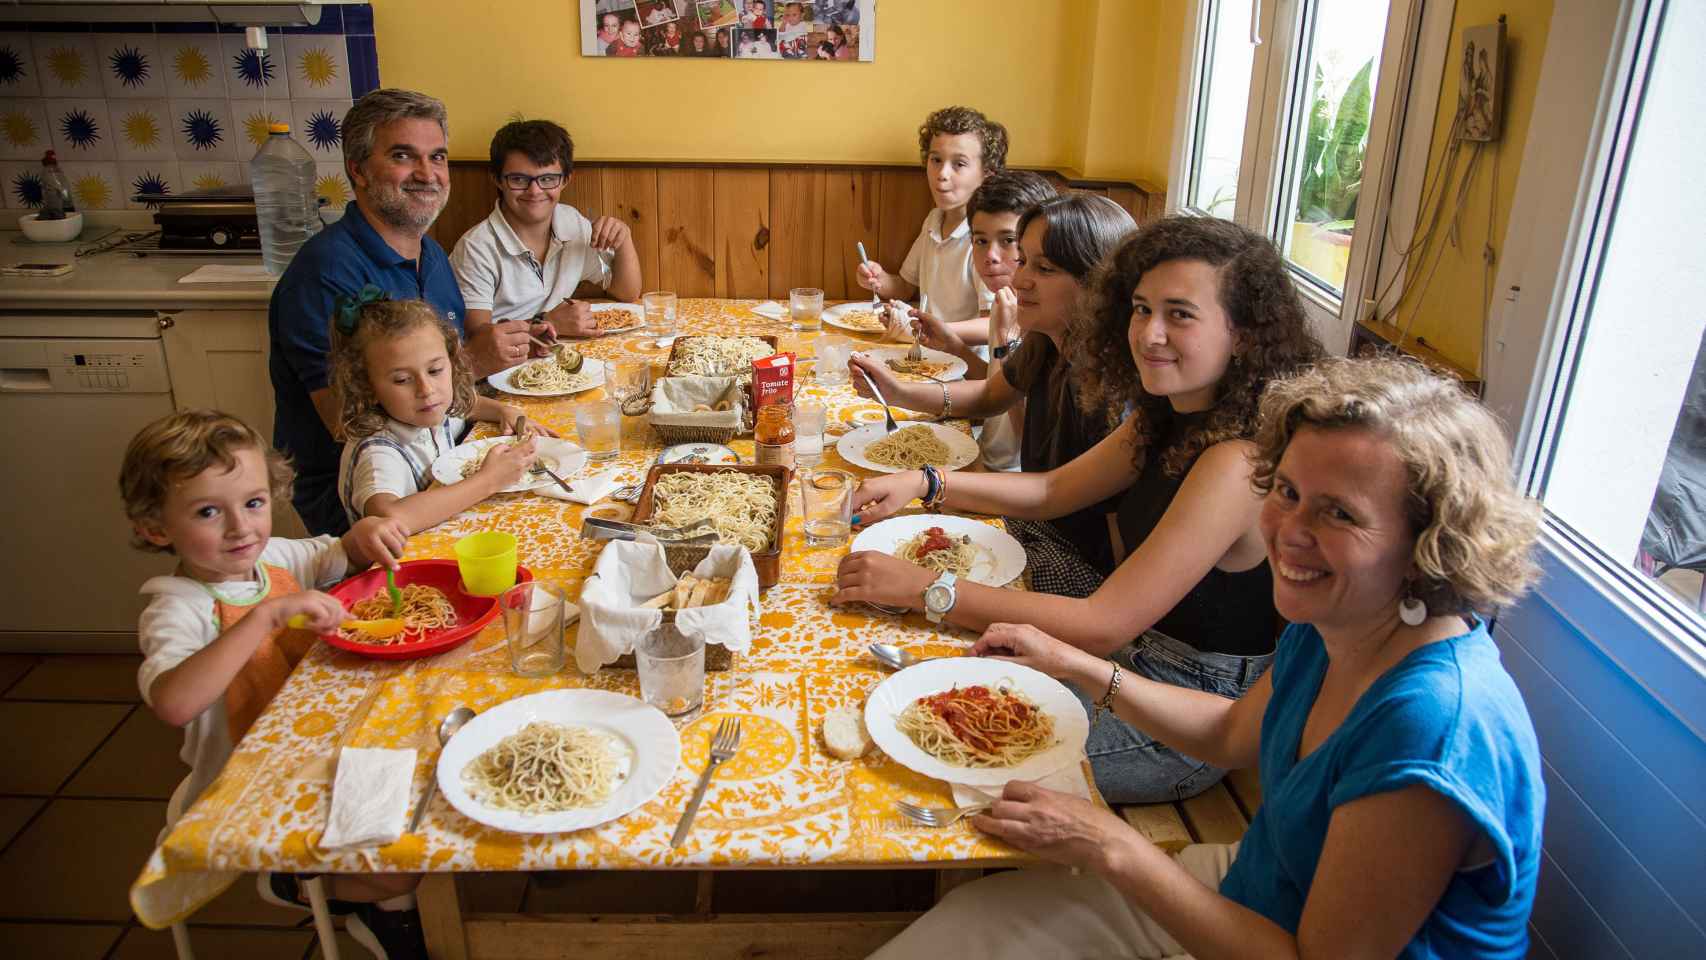 La familia Grosso de la Lama compartiendo mesa durante el almuerzo.